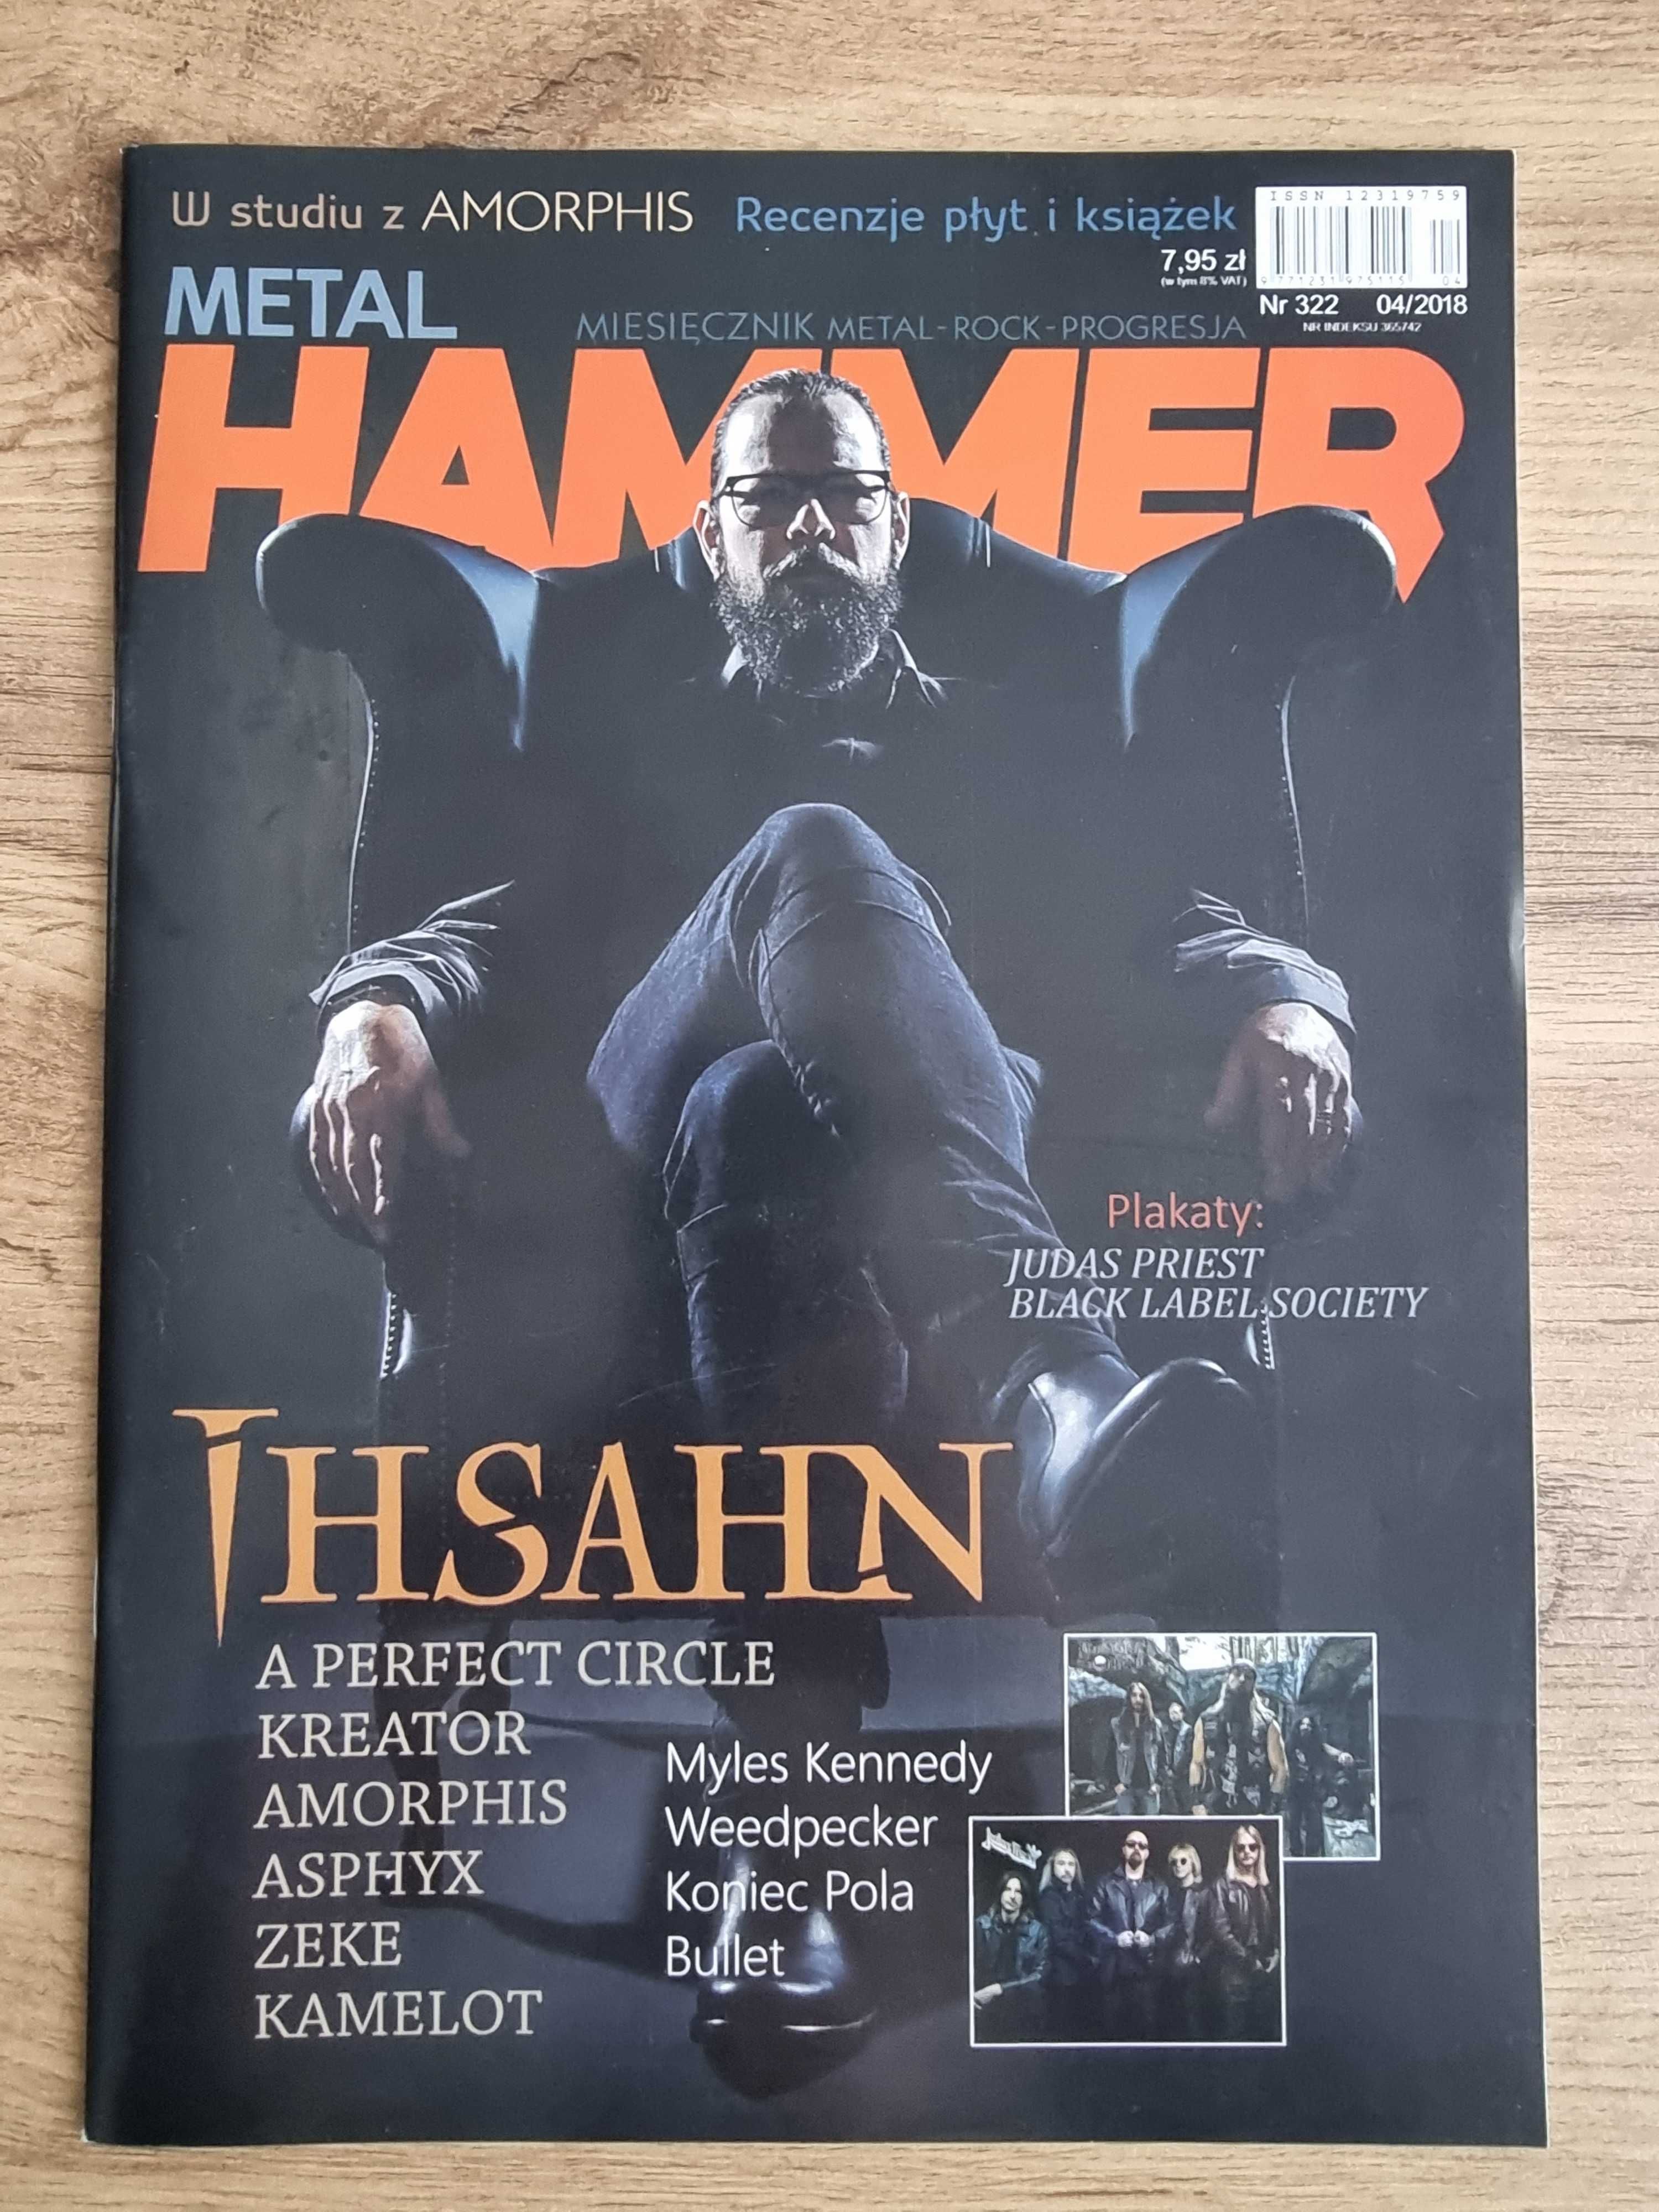 Metal Hammer 2018 - Ihsahn, Plakaty: Black Label Society, Judas Priest